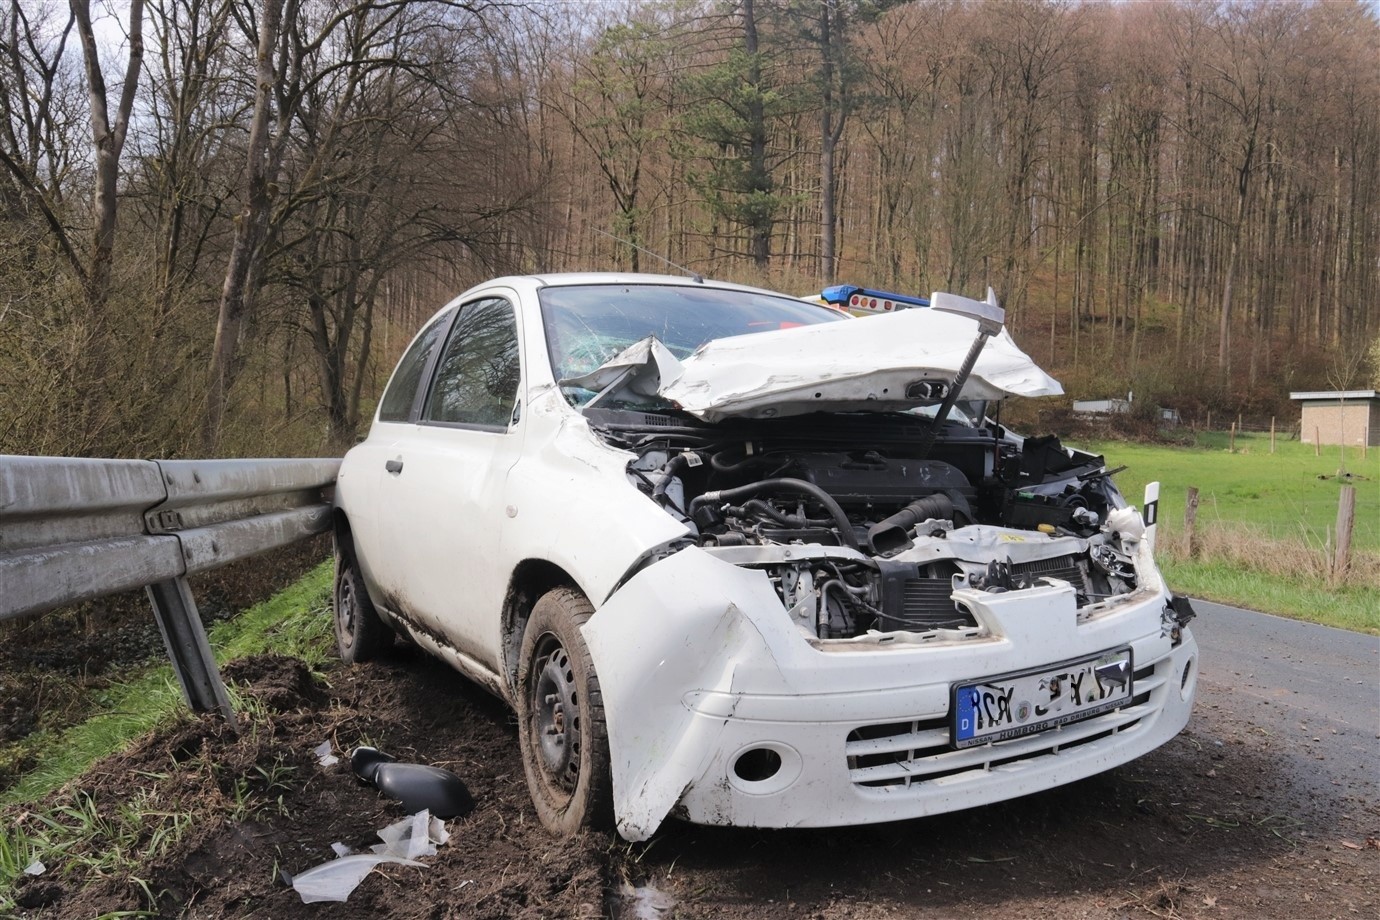 POL-HX: Autofahrerin bei Alleinunfall bei Höxter-Ovenhausen verletzt